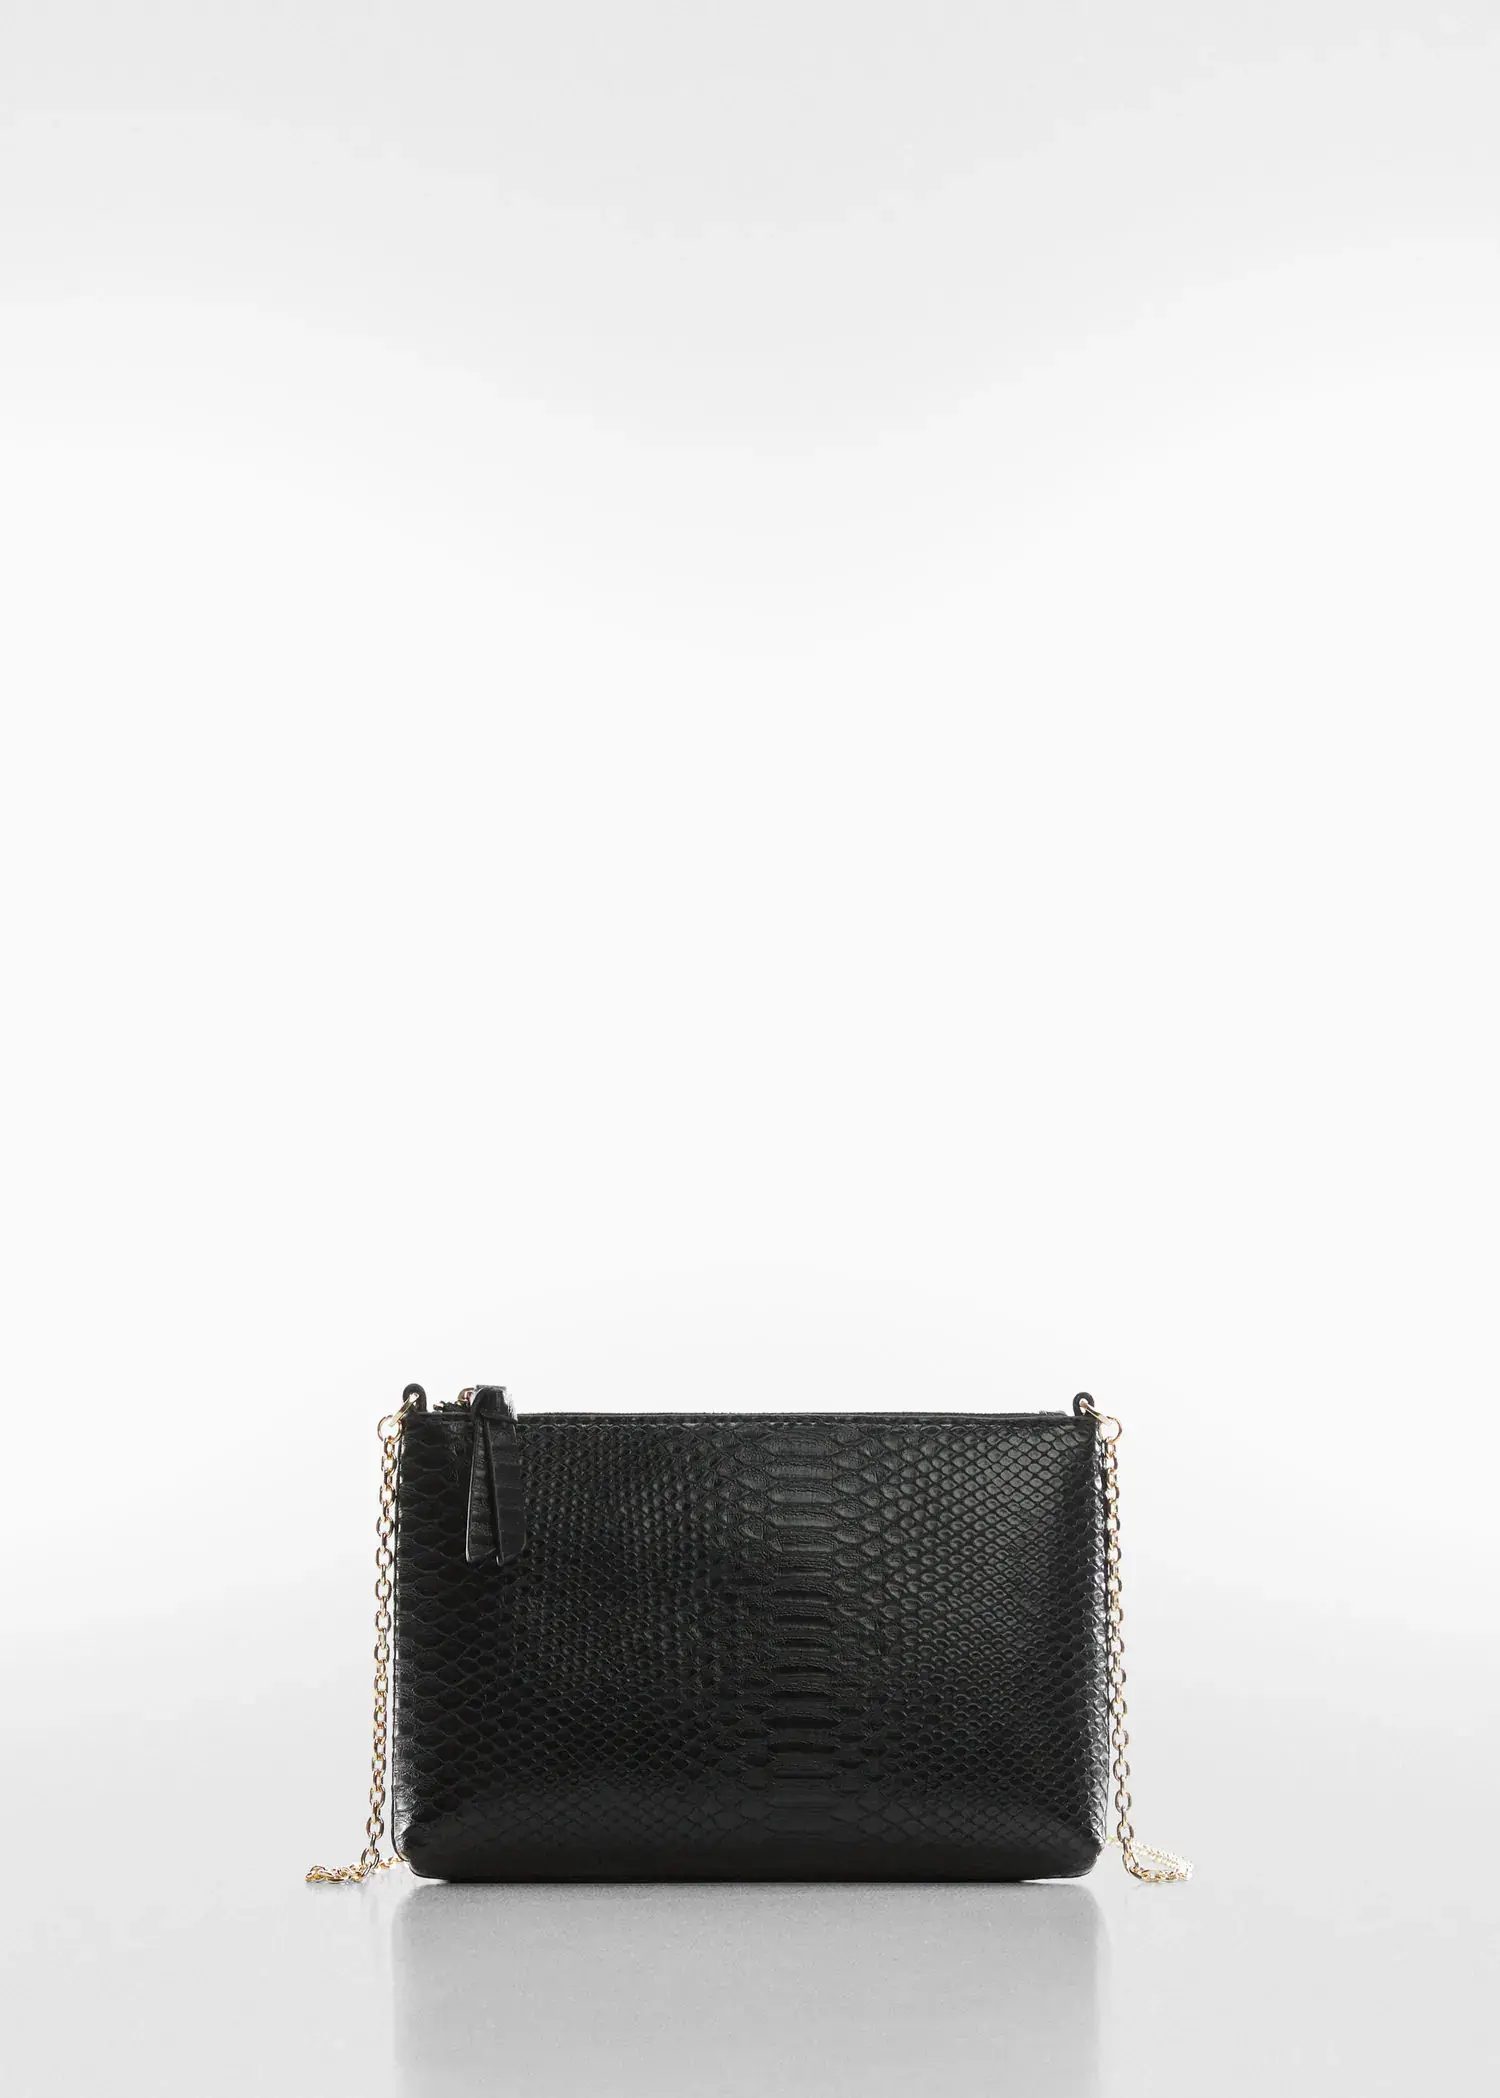 Women's handbag black MANGO | Soulz.lt